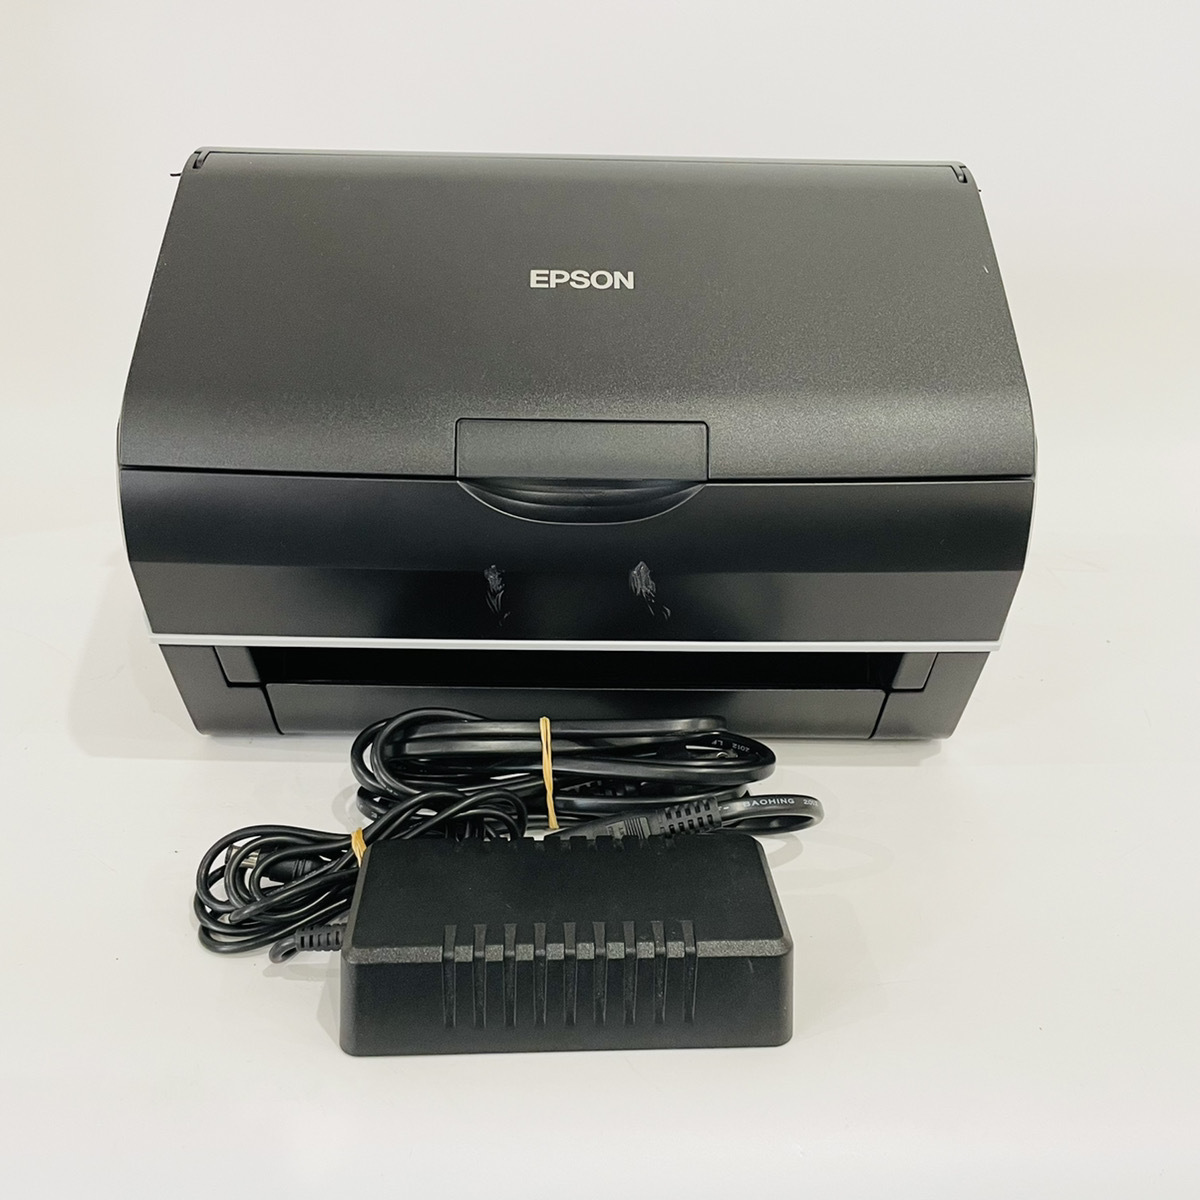 EPSON スキャナー DS-360W (シートフィード A4両面 Wi-Fi対応 コードレス) 通販